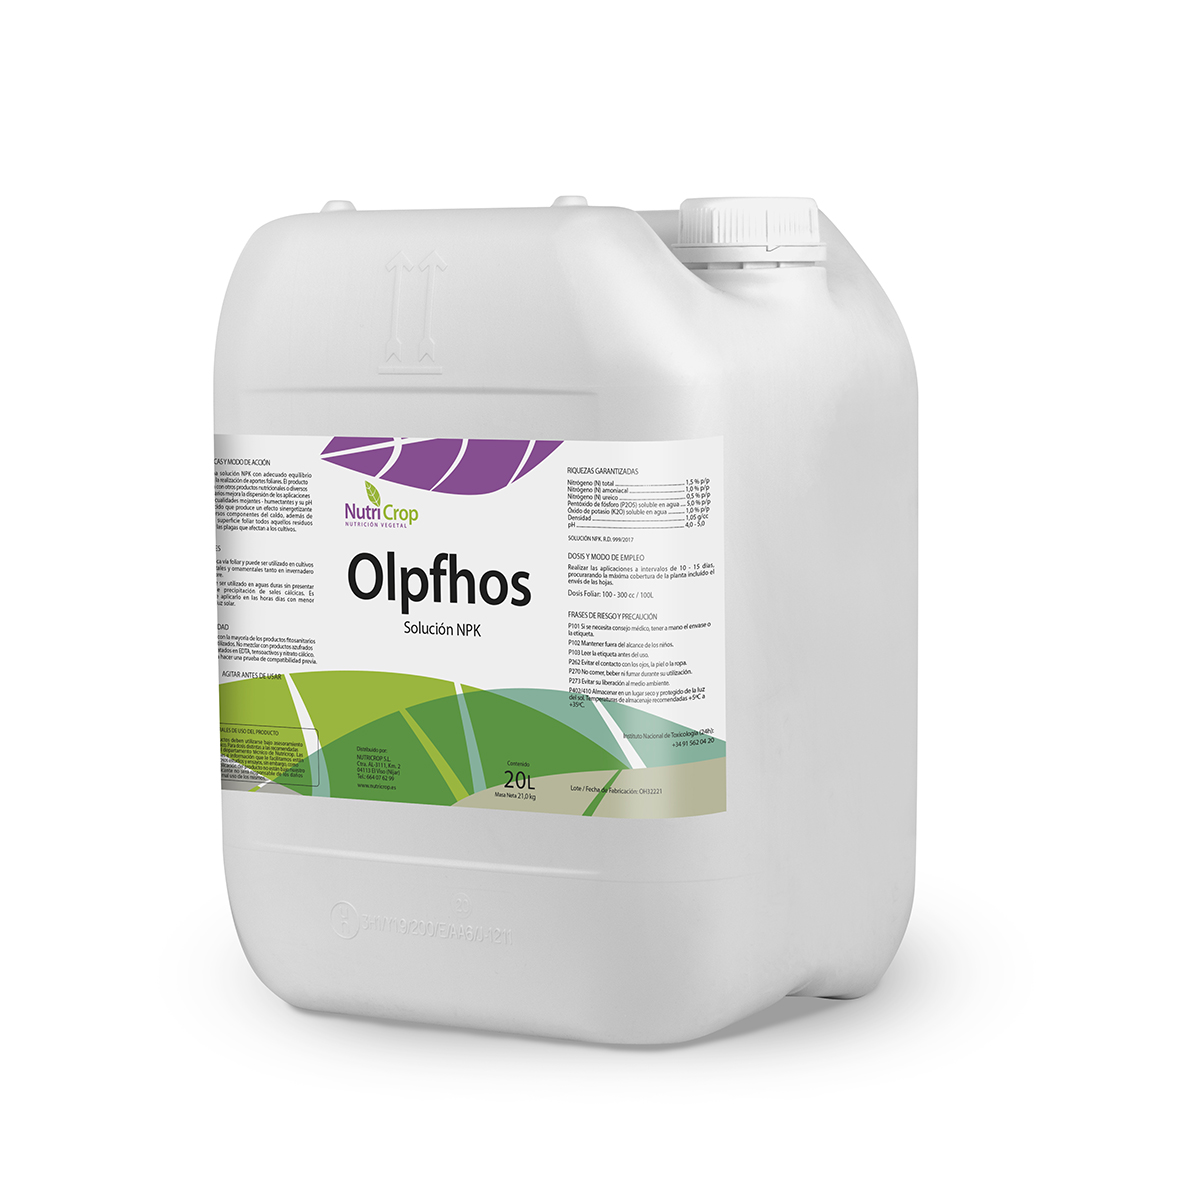 Olpfhos - Nutricrop